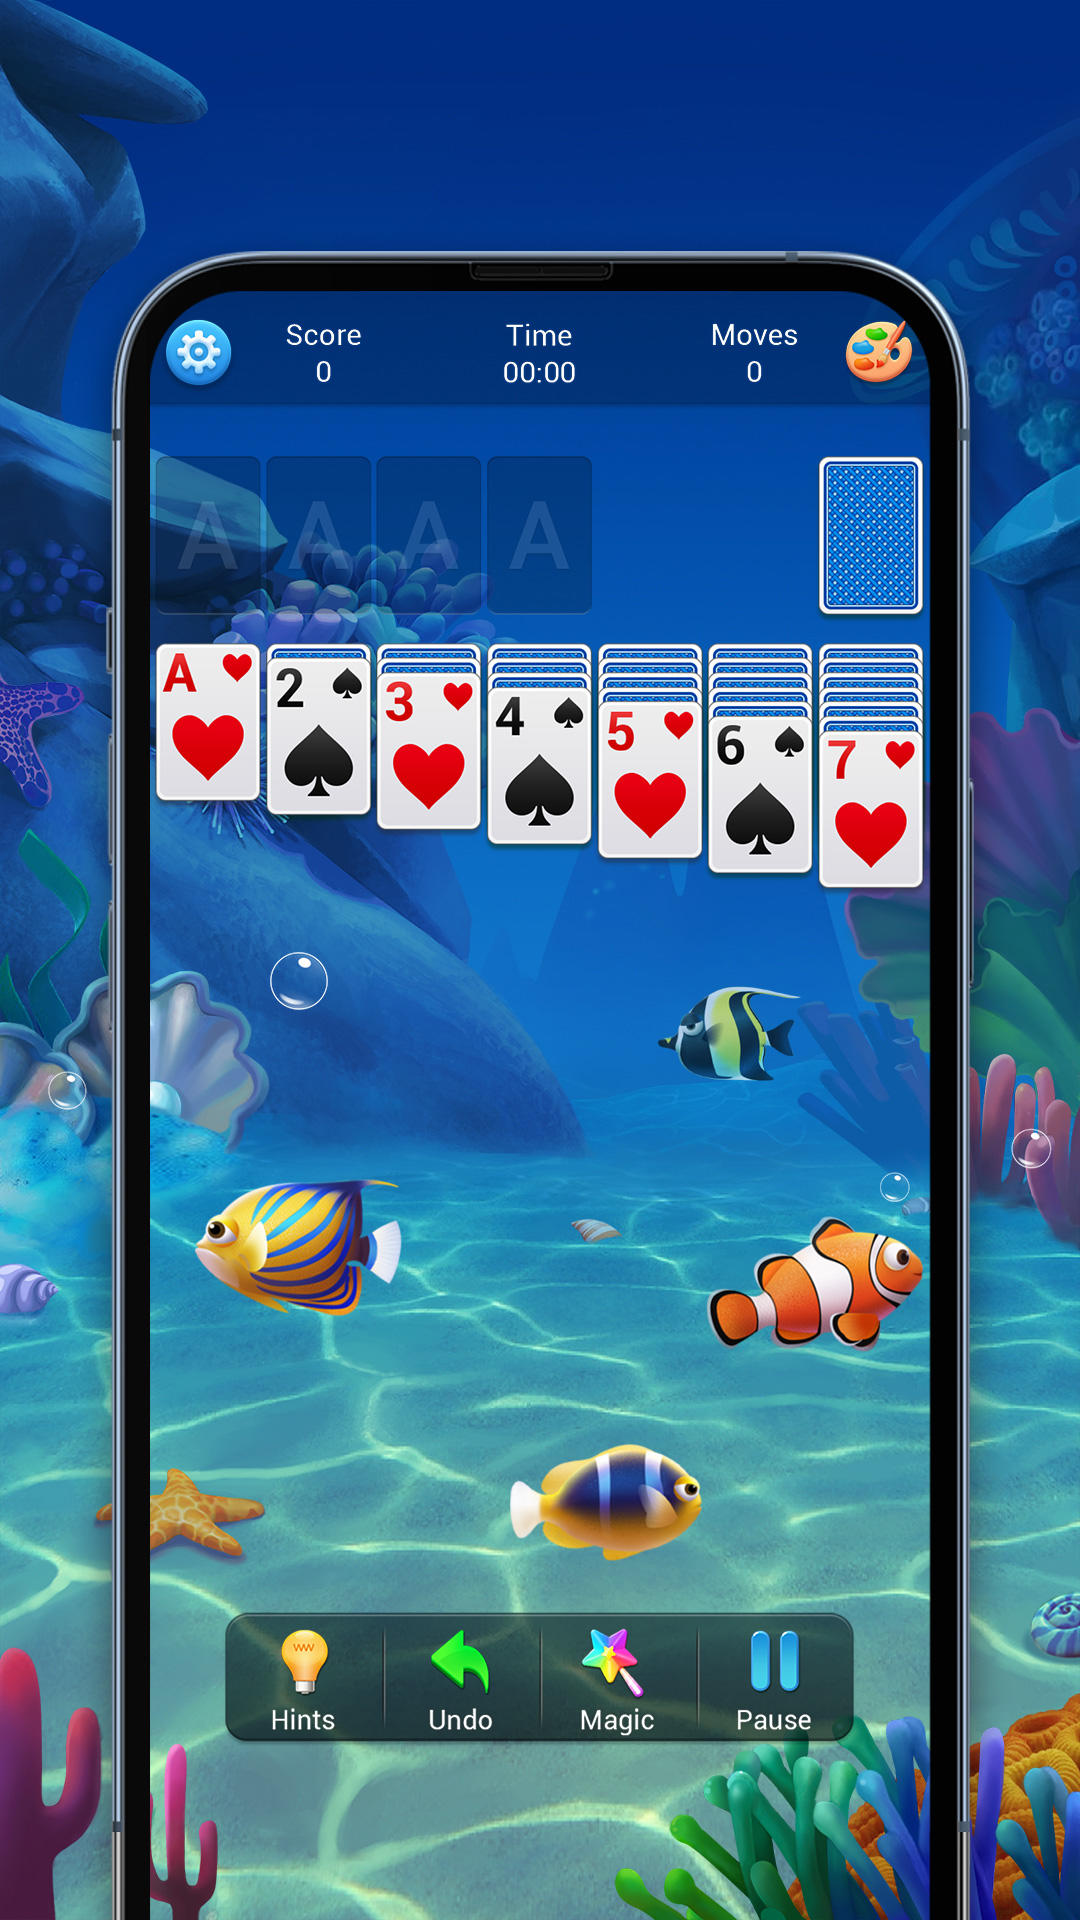 Screenshot 1 of Juegos de Solitario, Klondike 1.1.99